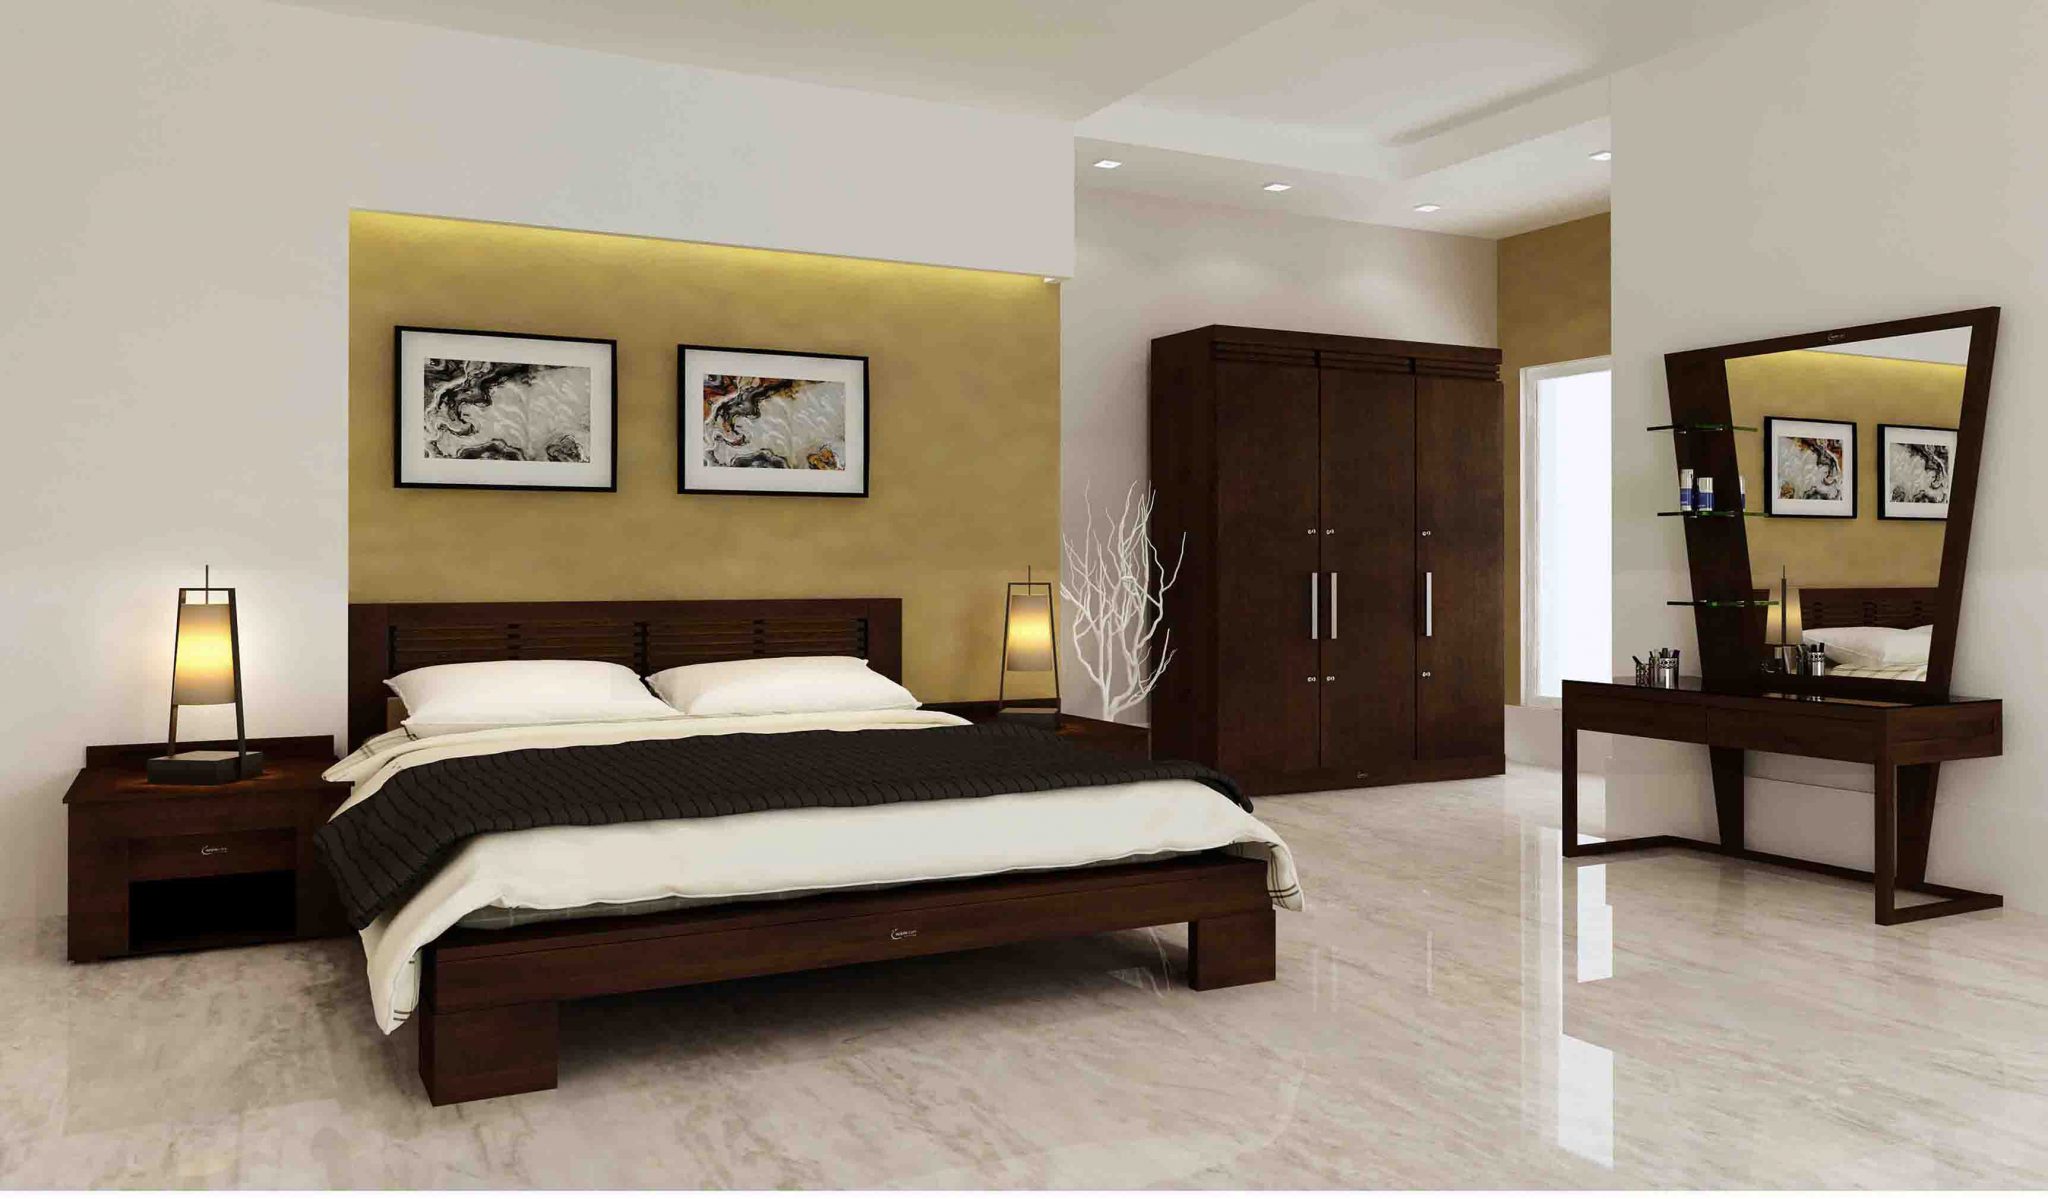 Bed Room Furniture in Kerala | Wooden Bed Room Furniture Sets | Best